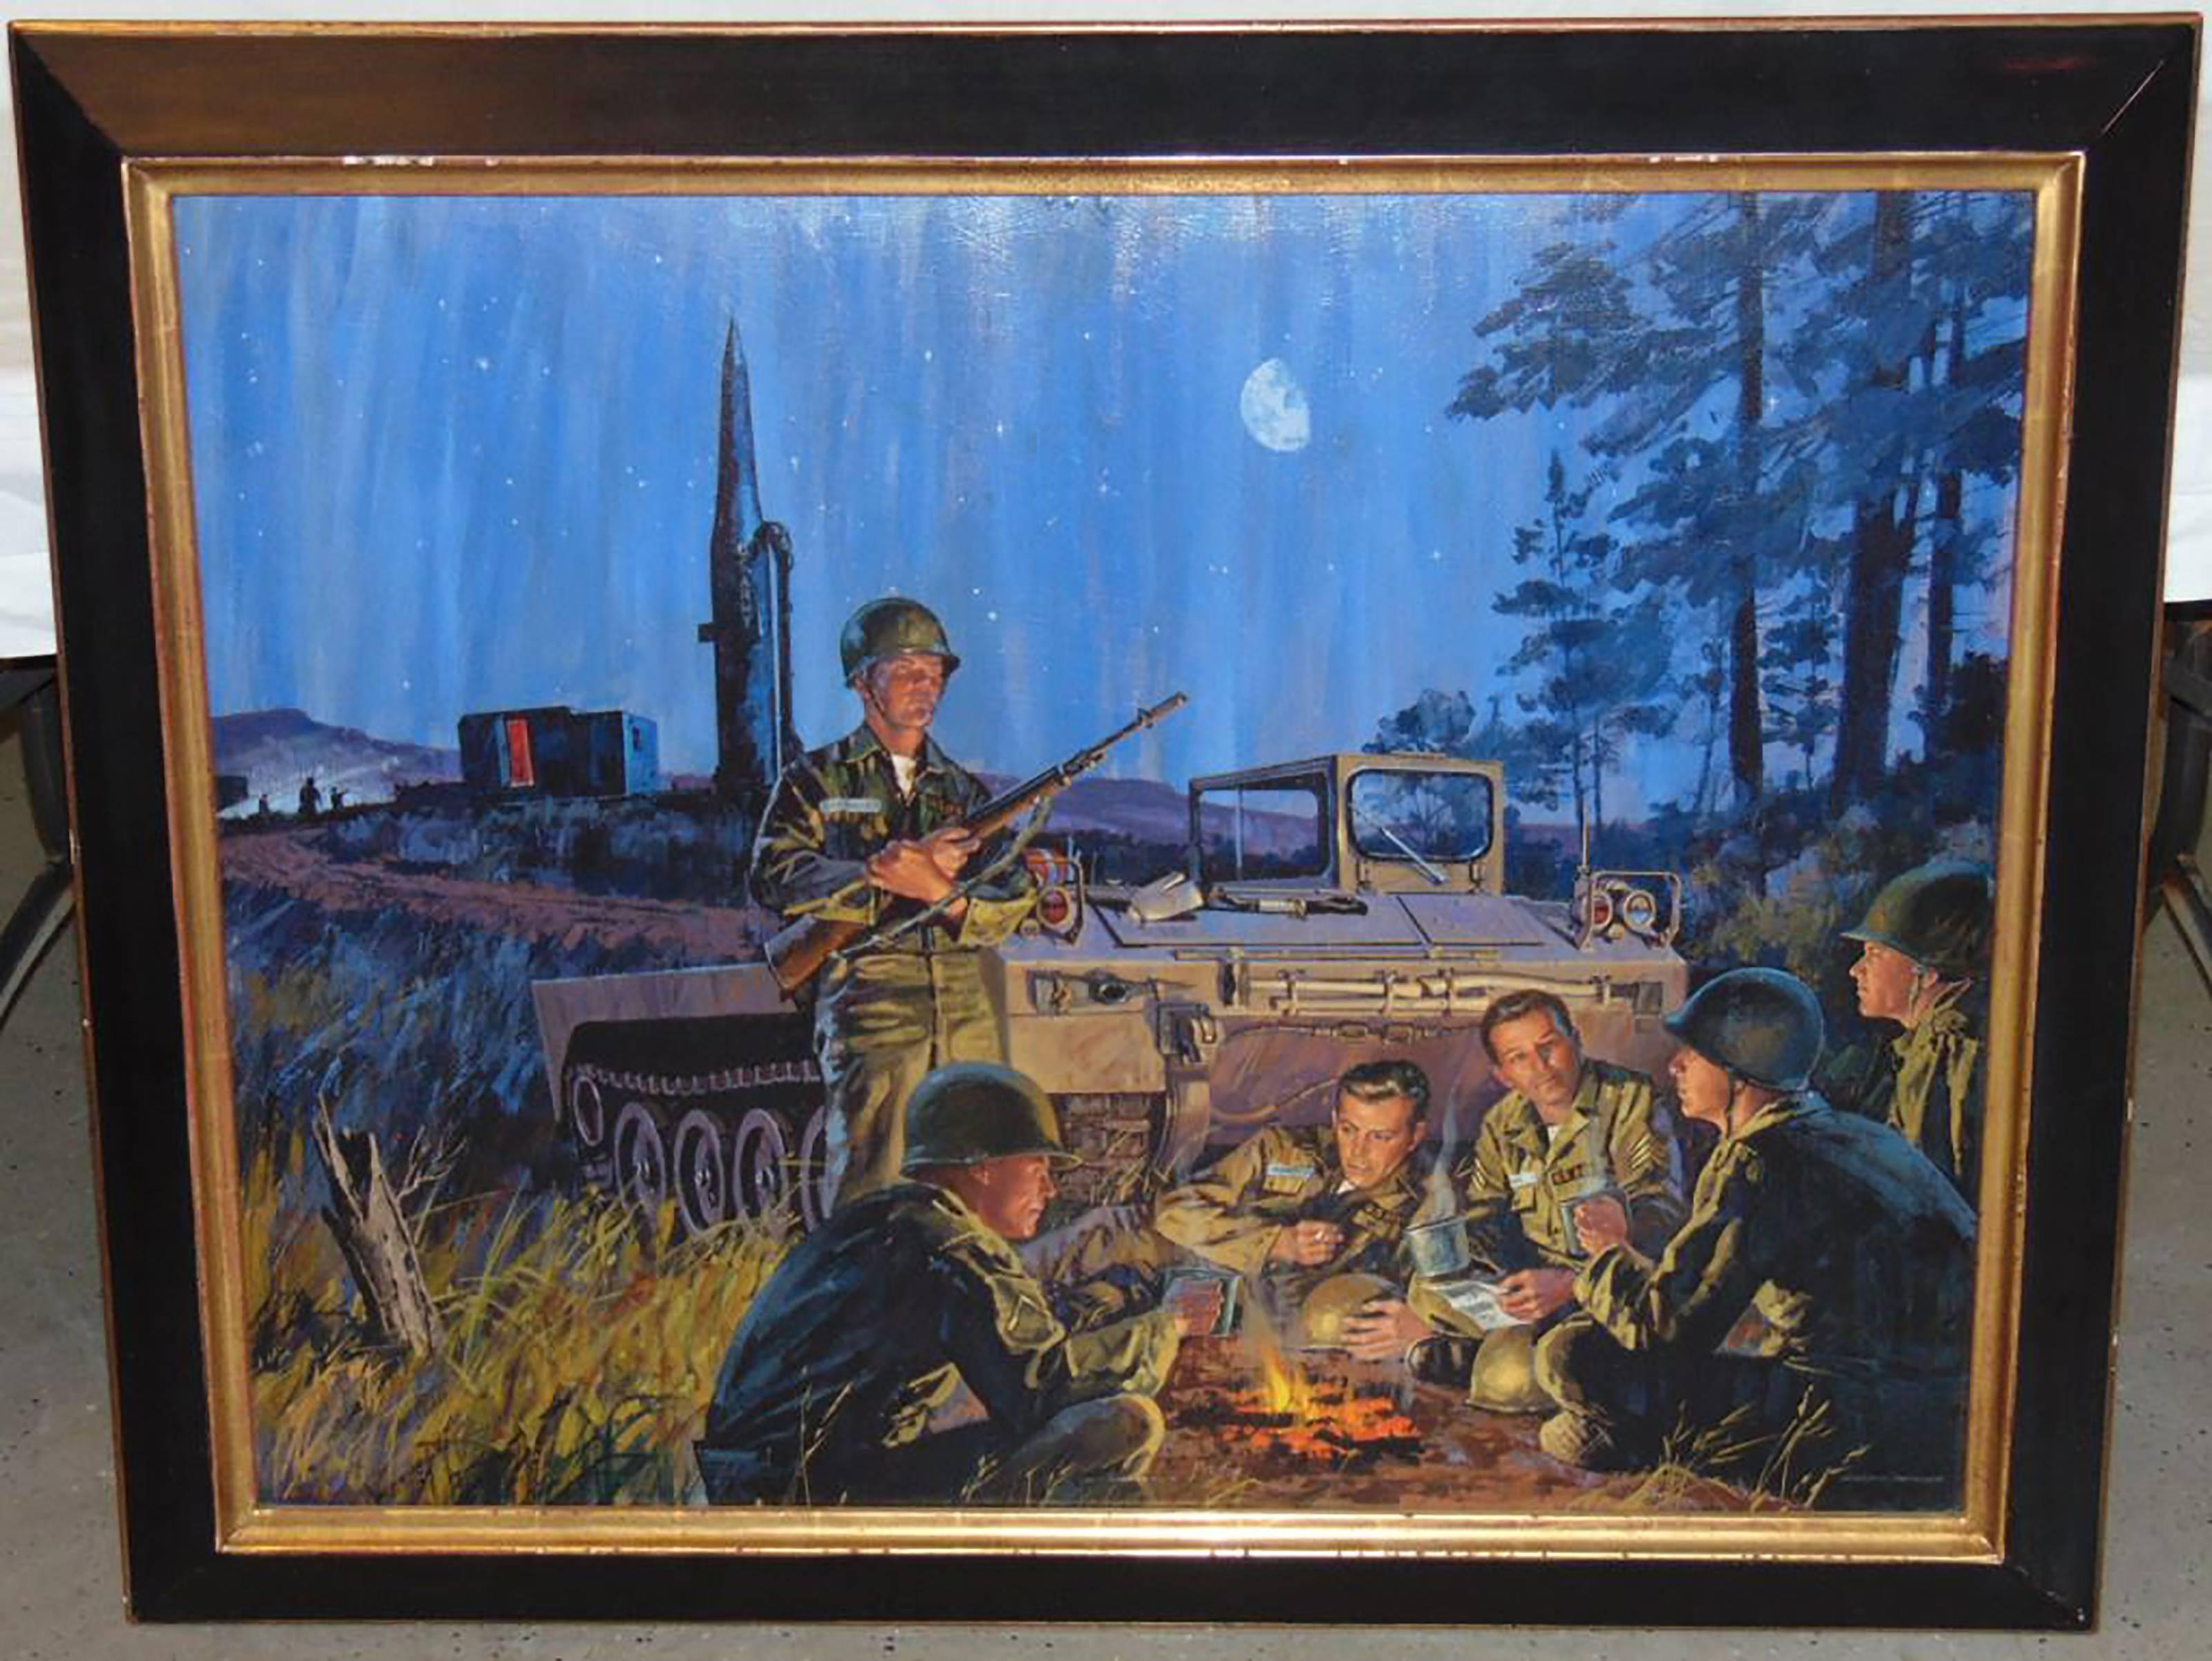 U.S. Army Encampment - Painting by Mead Schaeffer